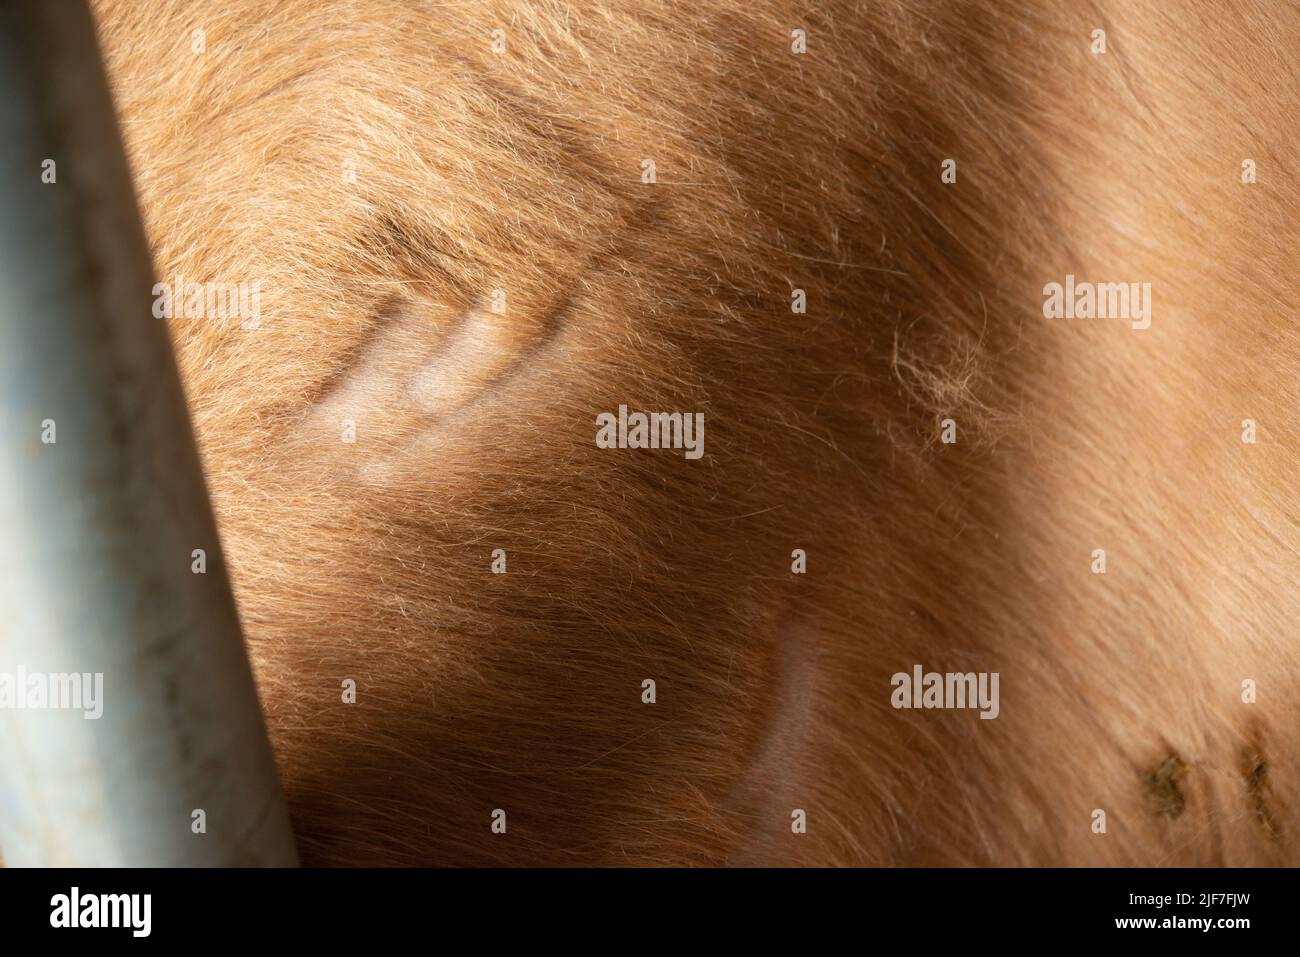 Raised skin swelling Stock Photo